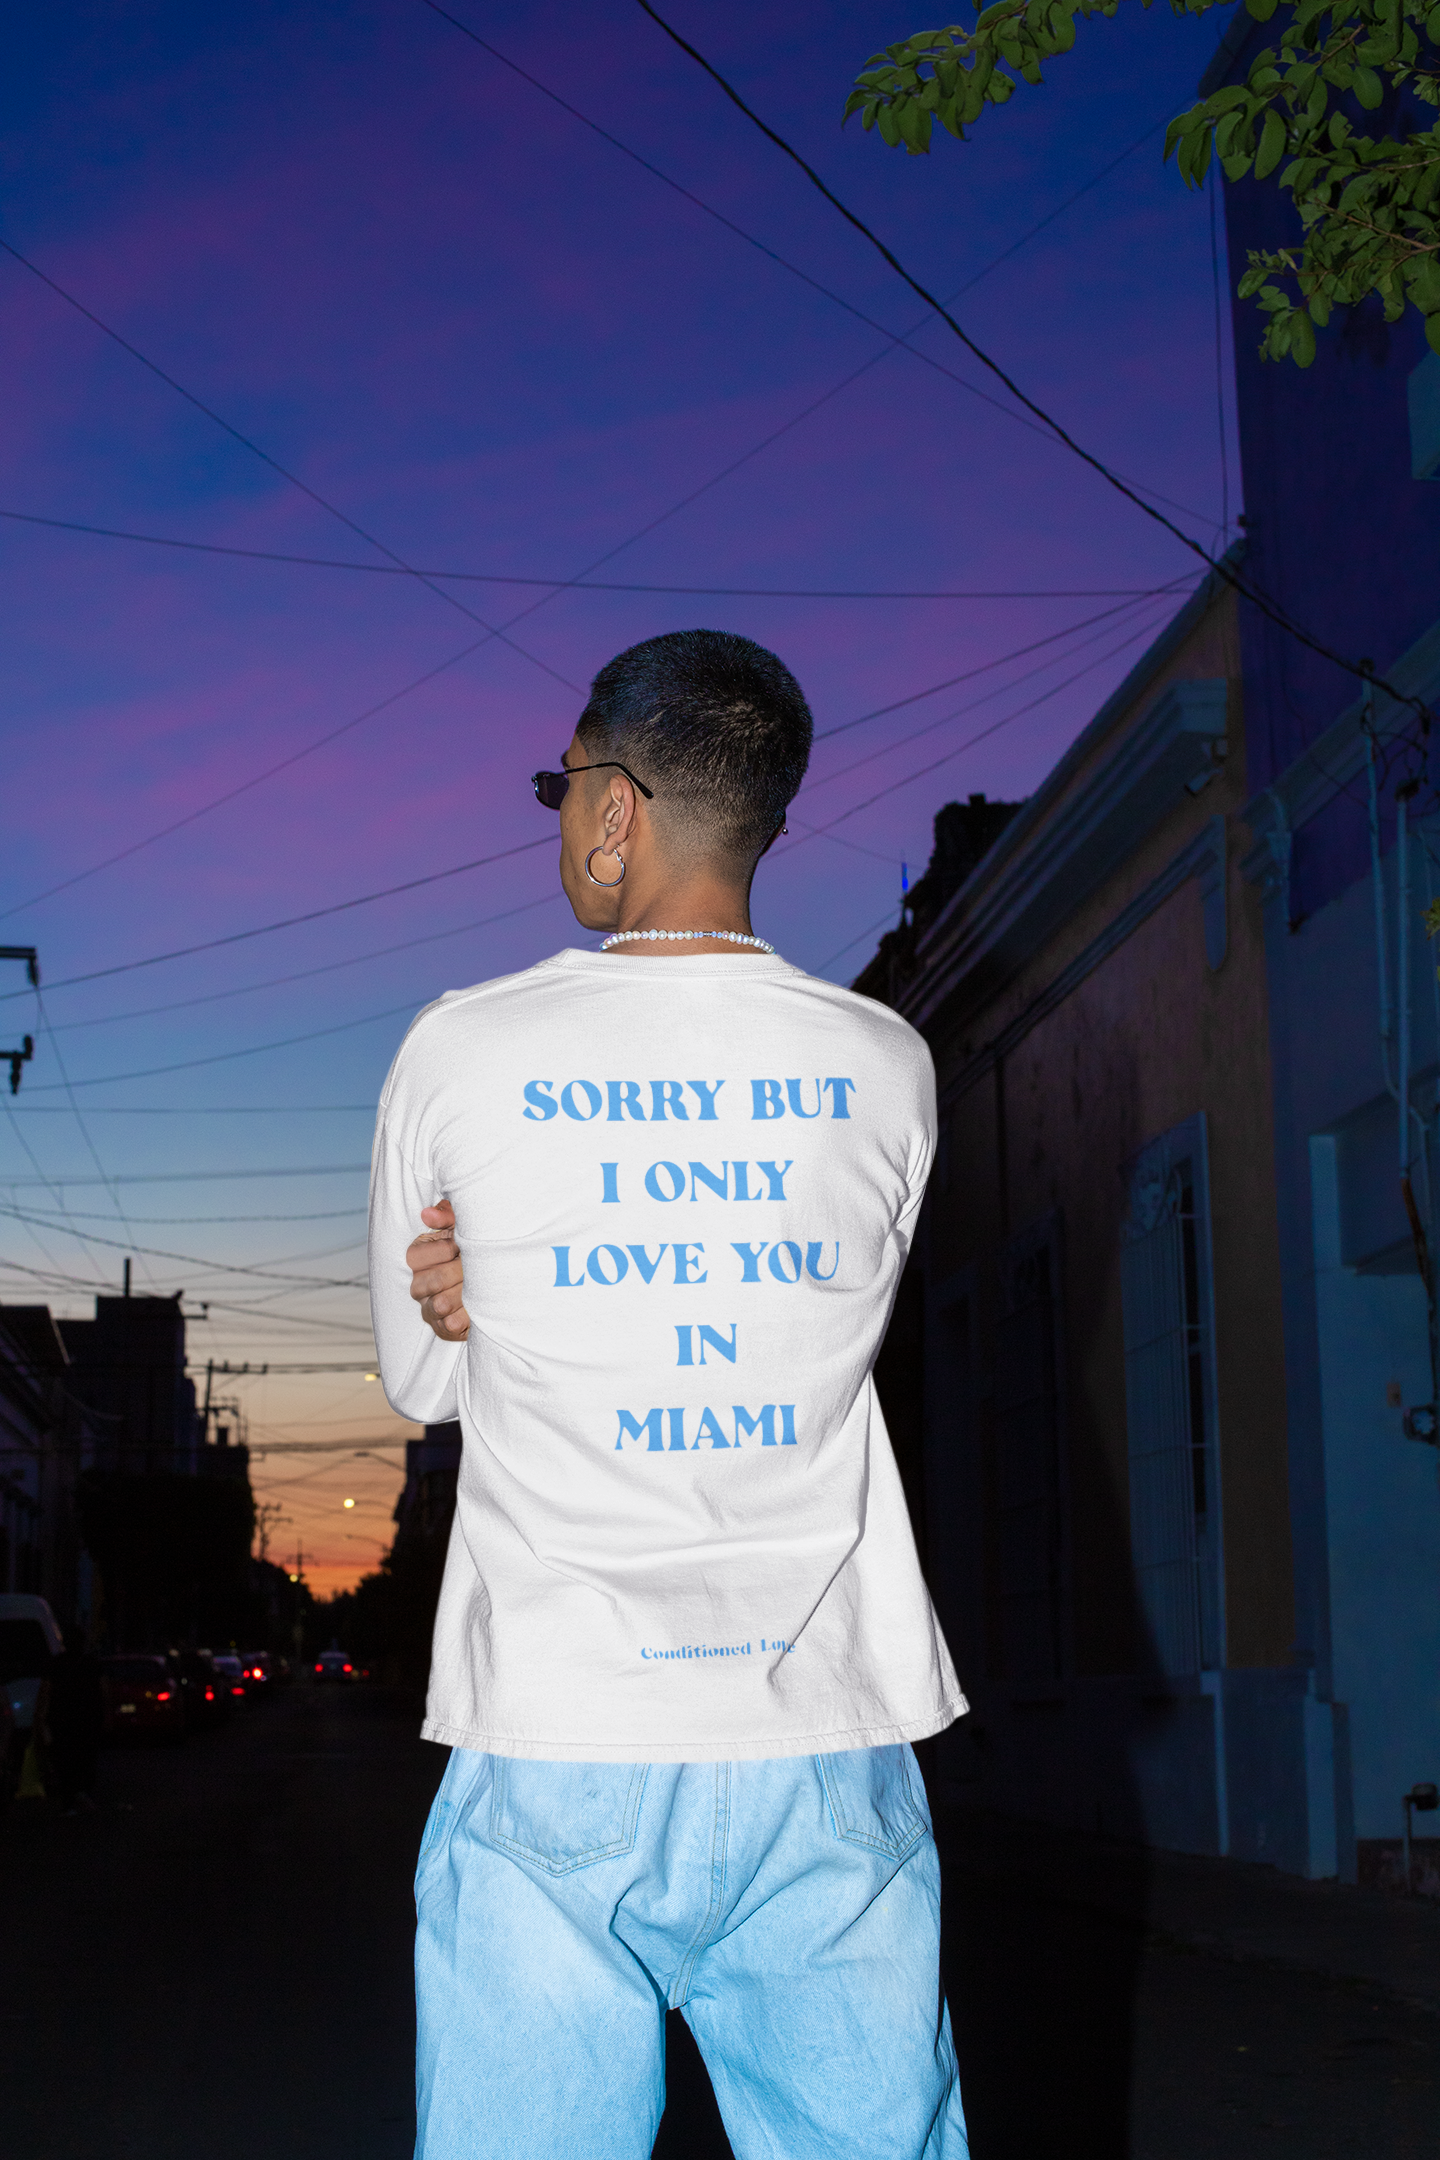 Miami T-Shirt